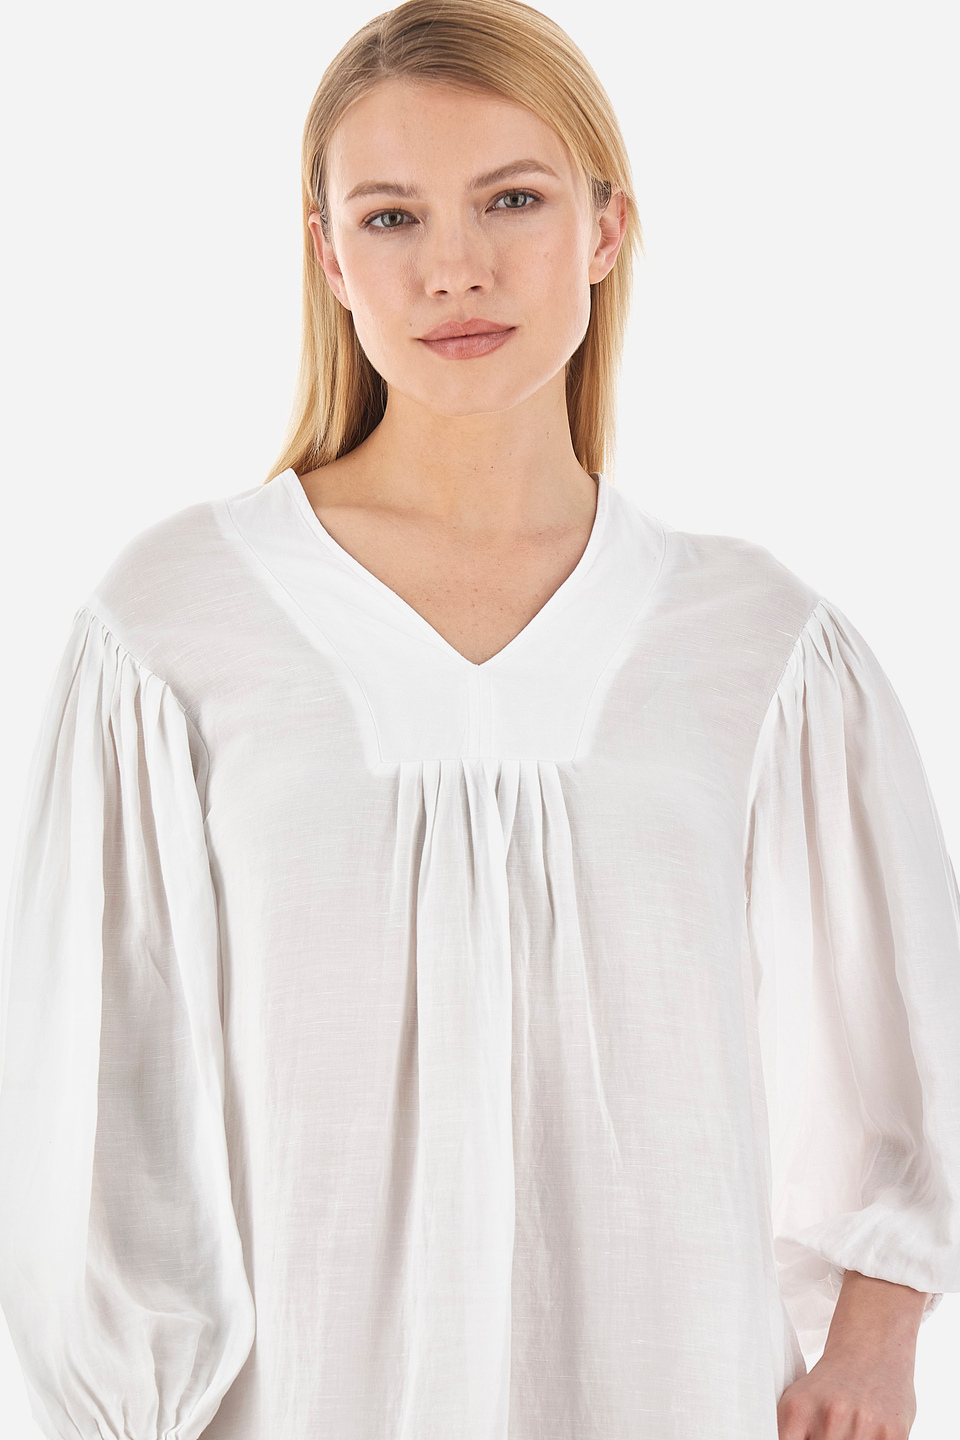 Women's 3/4 length sleeve linen blend dress - Valaria | La Martina - Official Online Shop